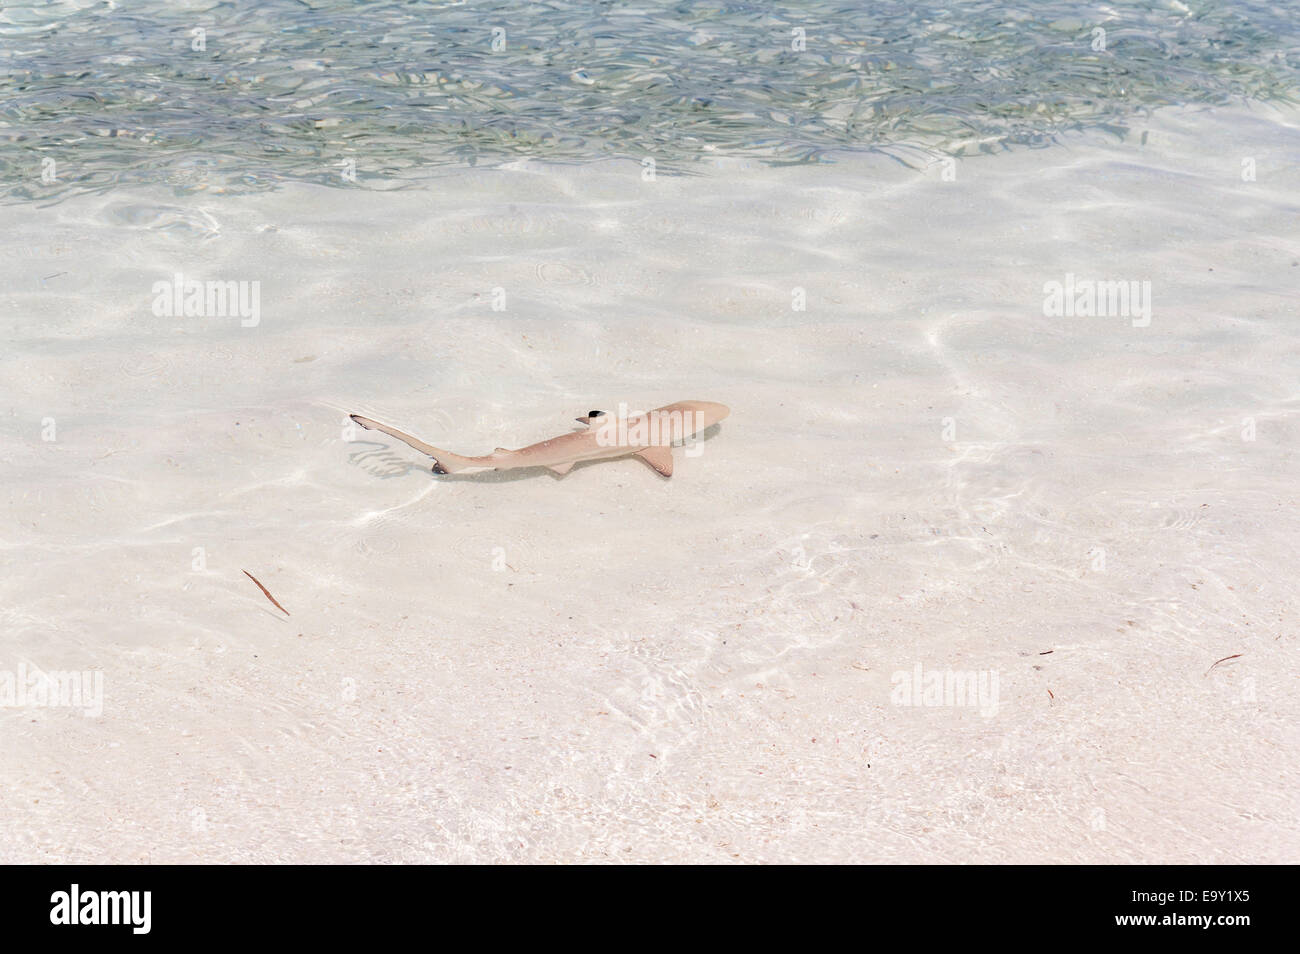 Blacktip Shark Reef (Carcharhinus melanopterus) in acque poco profonde, kurendhoo isola, lhaviyani atoll, Maldive Foto Stock